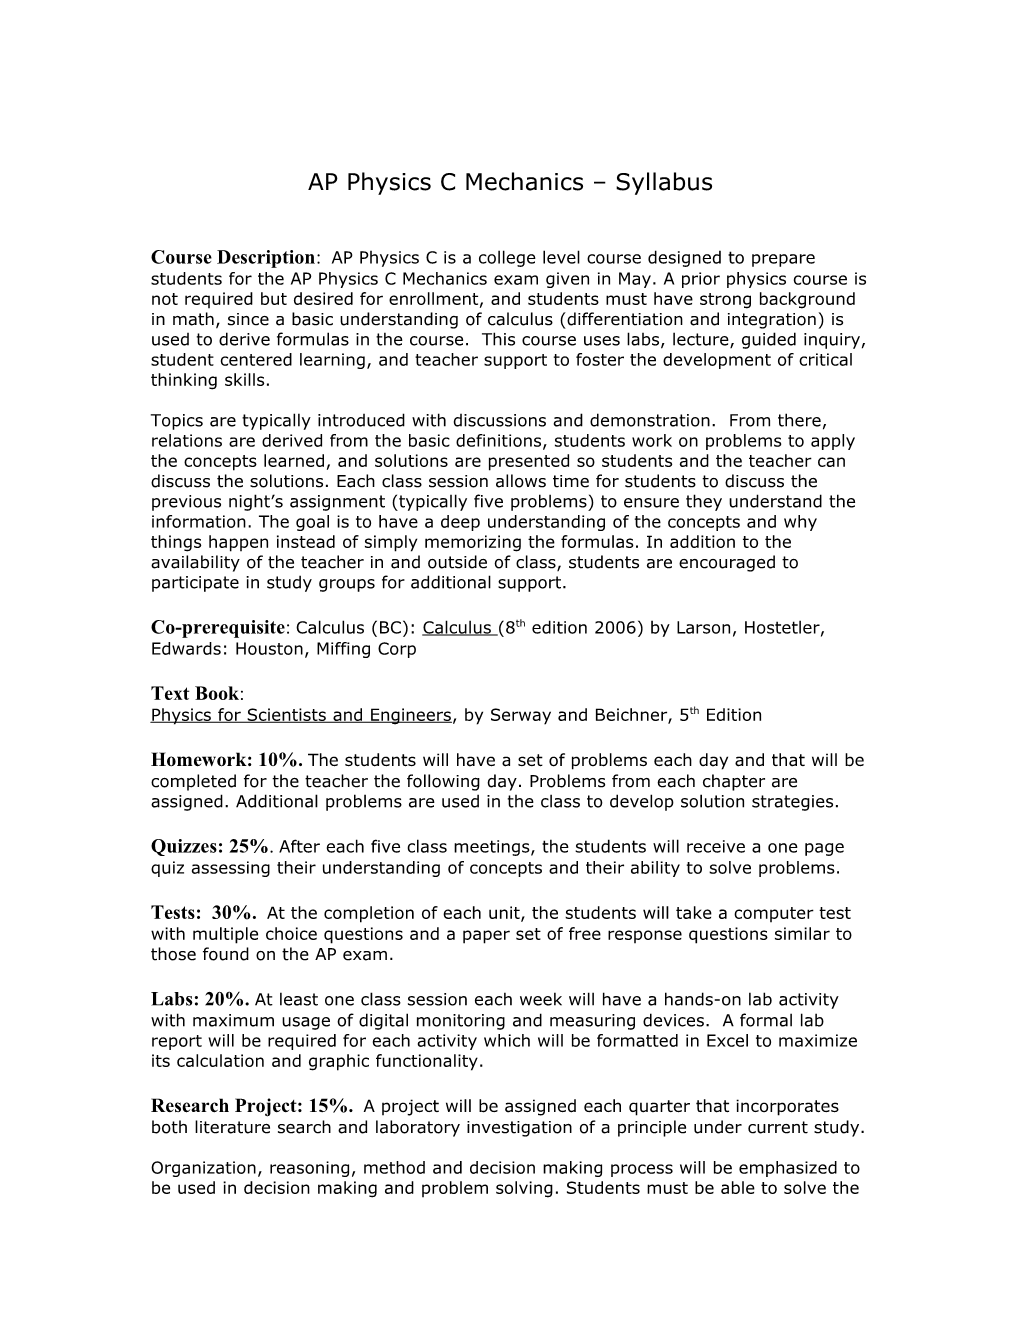 AP Physics C Mechanics Syllabus